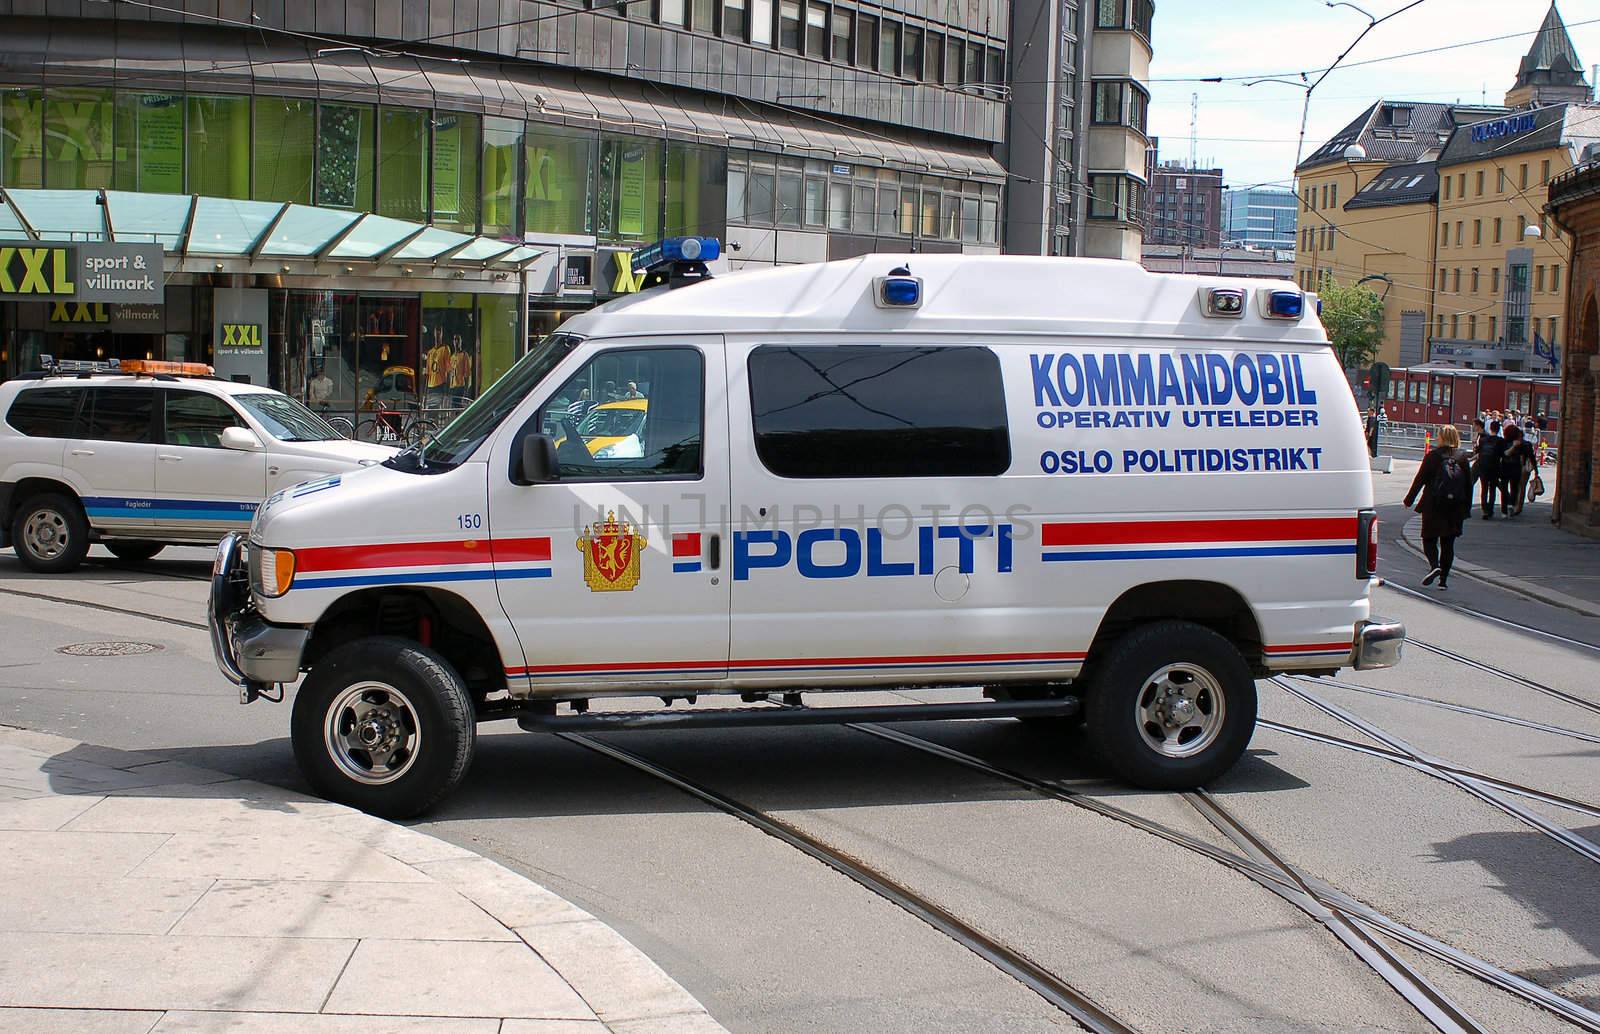 Policecar in Oslo Norway by Espevalen